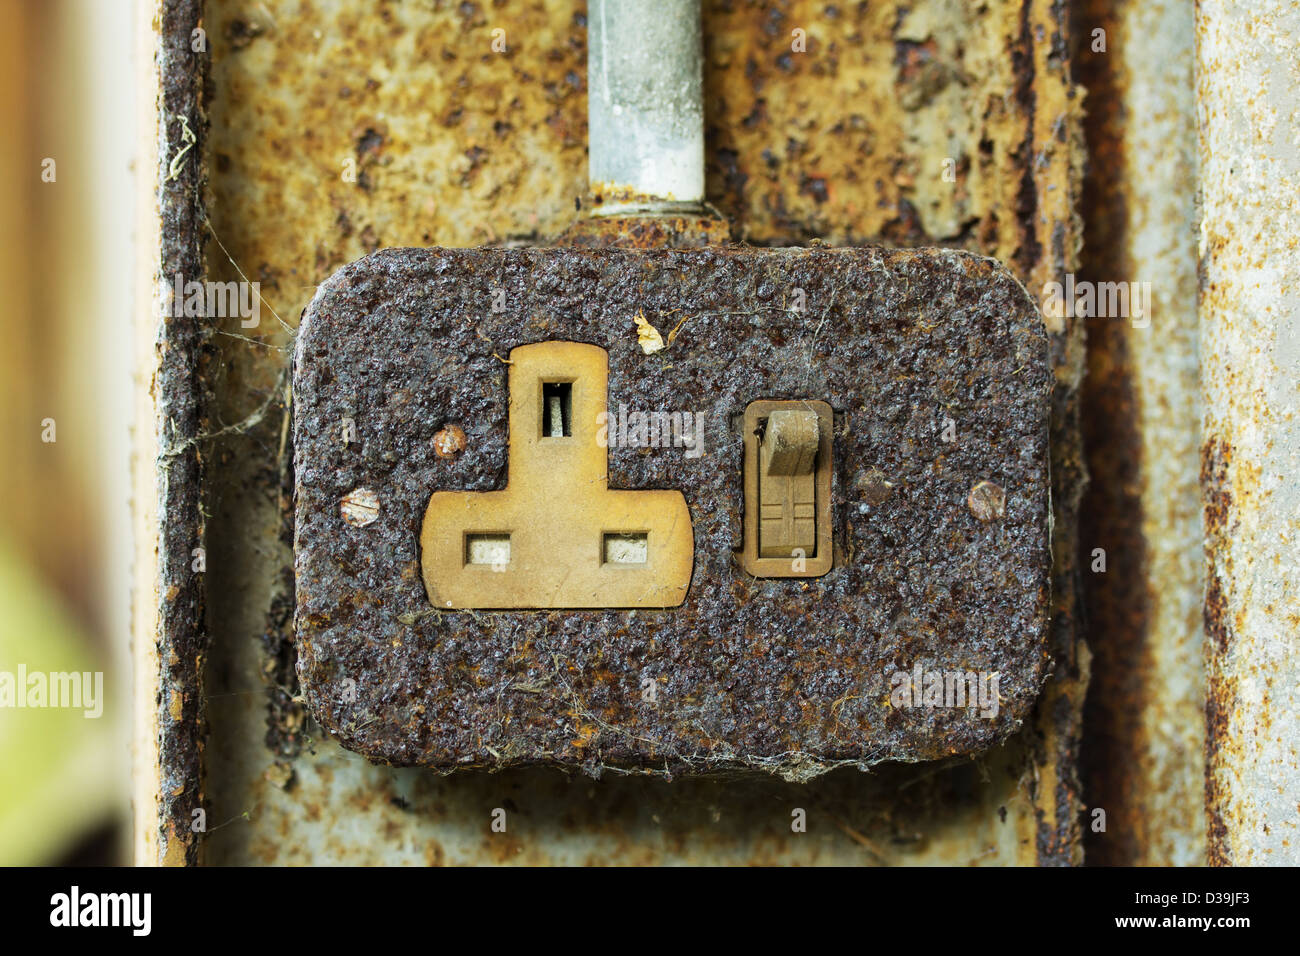 Old rusty 3 pin plug socket on a rusty beam Stock Photo